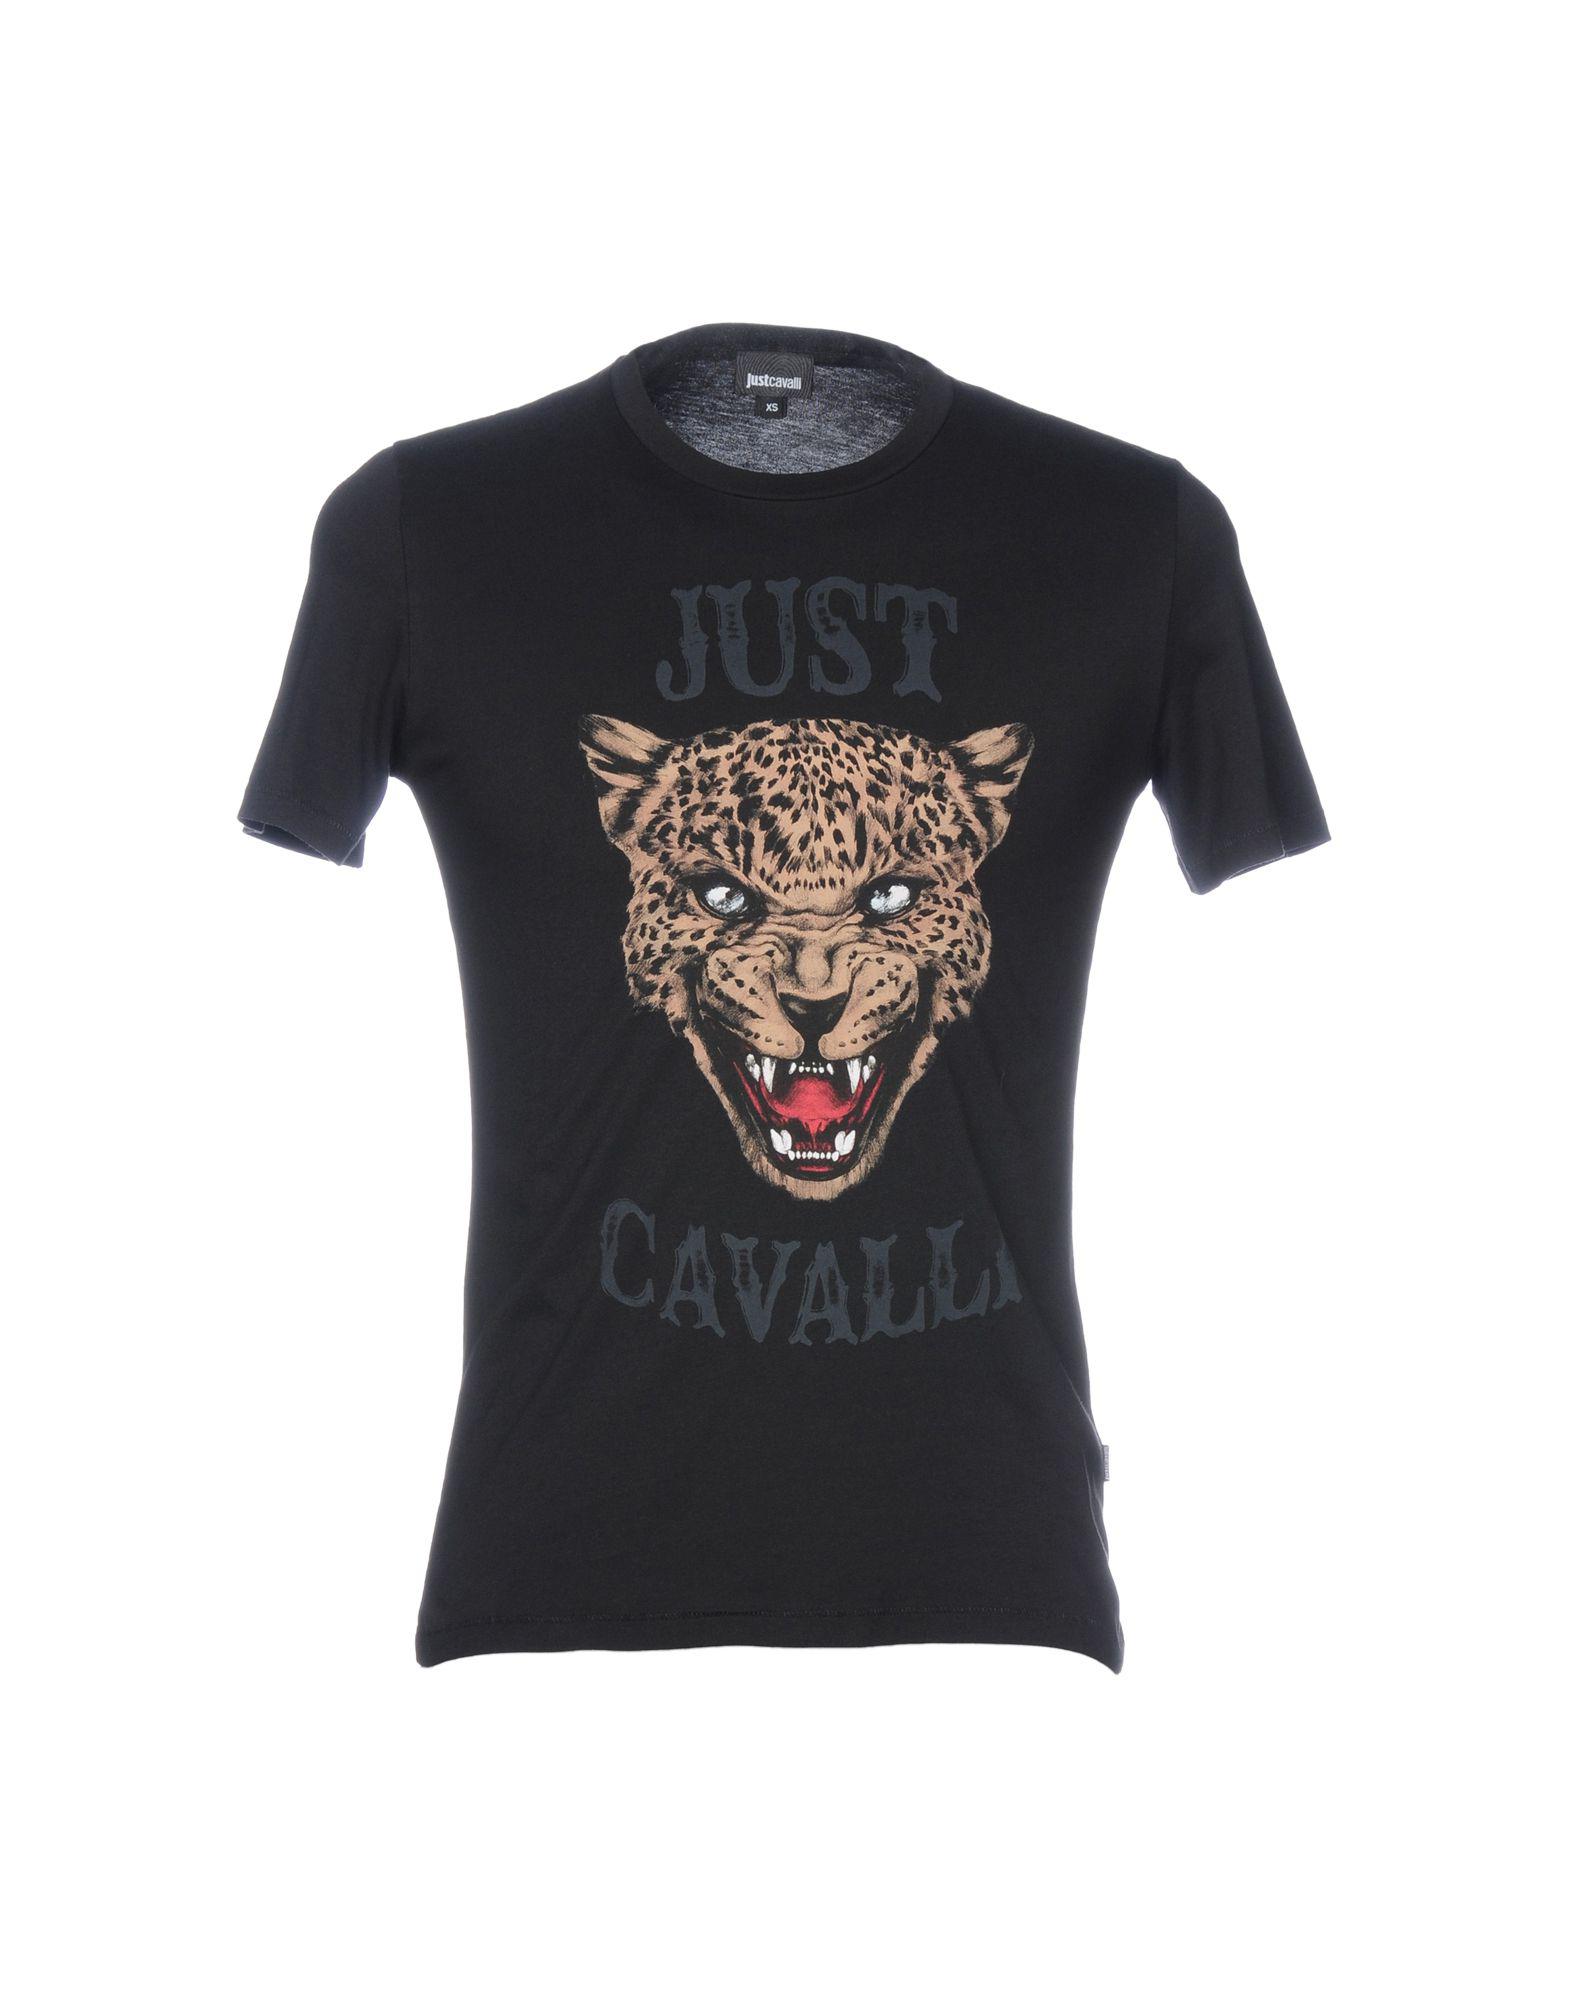 Just Cavalli T-shirt in Black for Men - Lyst